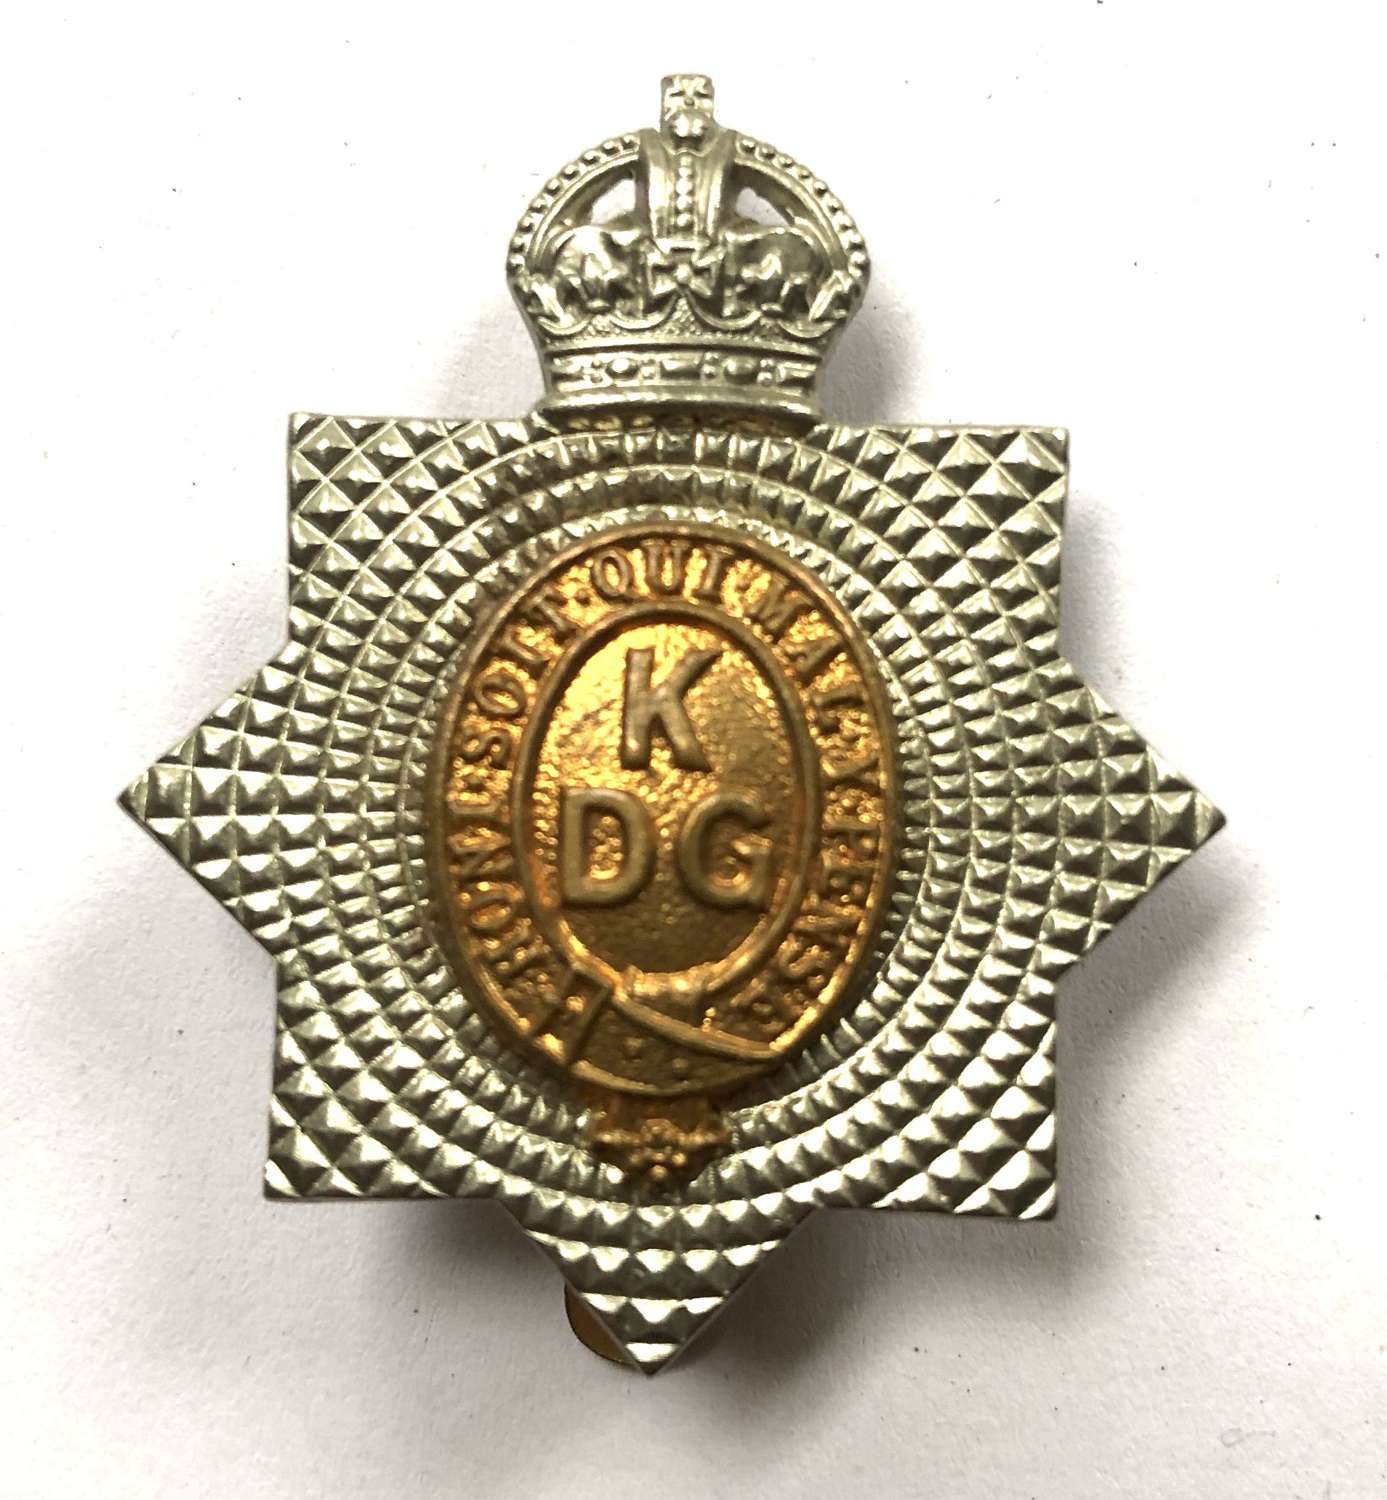 1st King's Dragoon Guards WW1 post 1915 cap badge